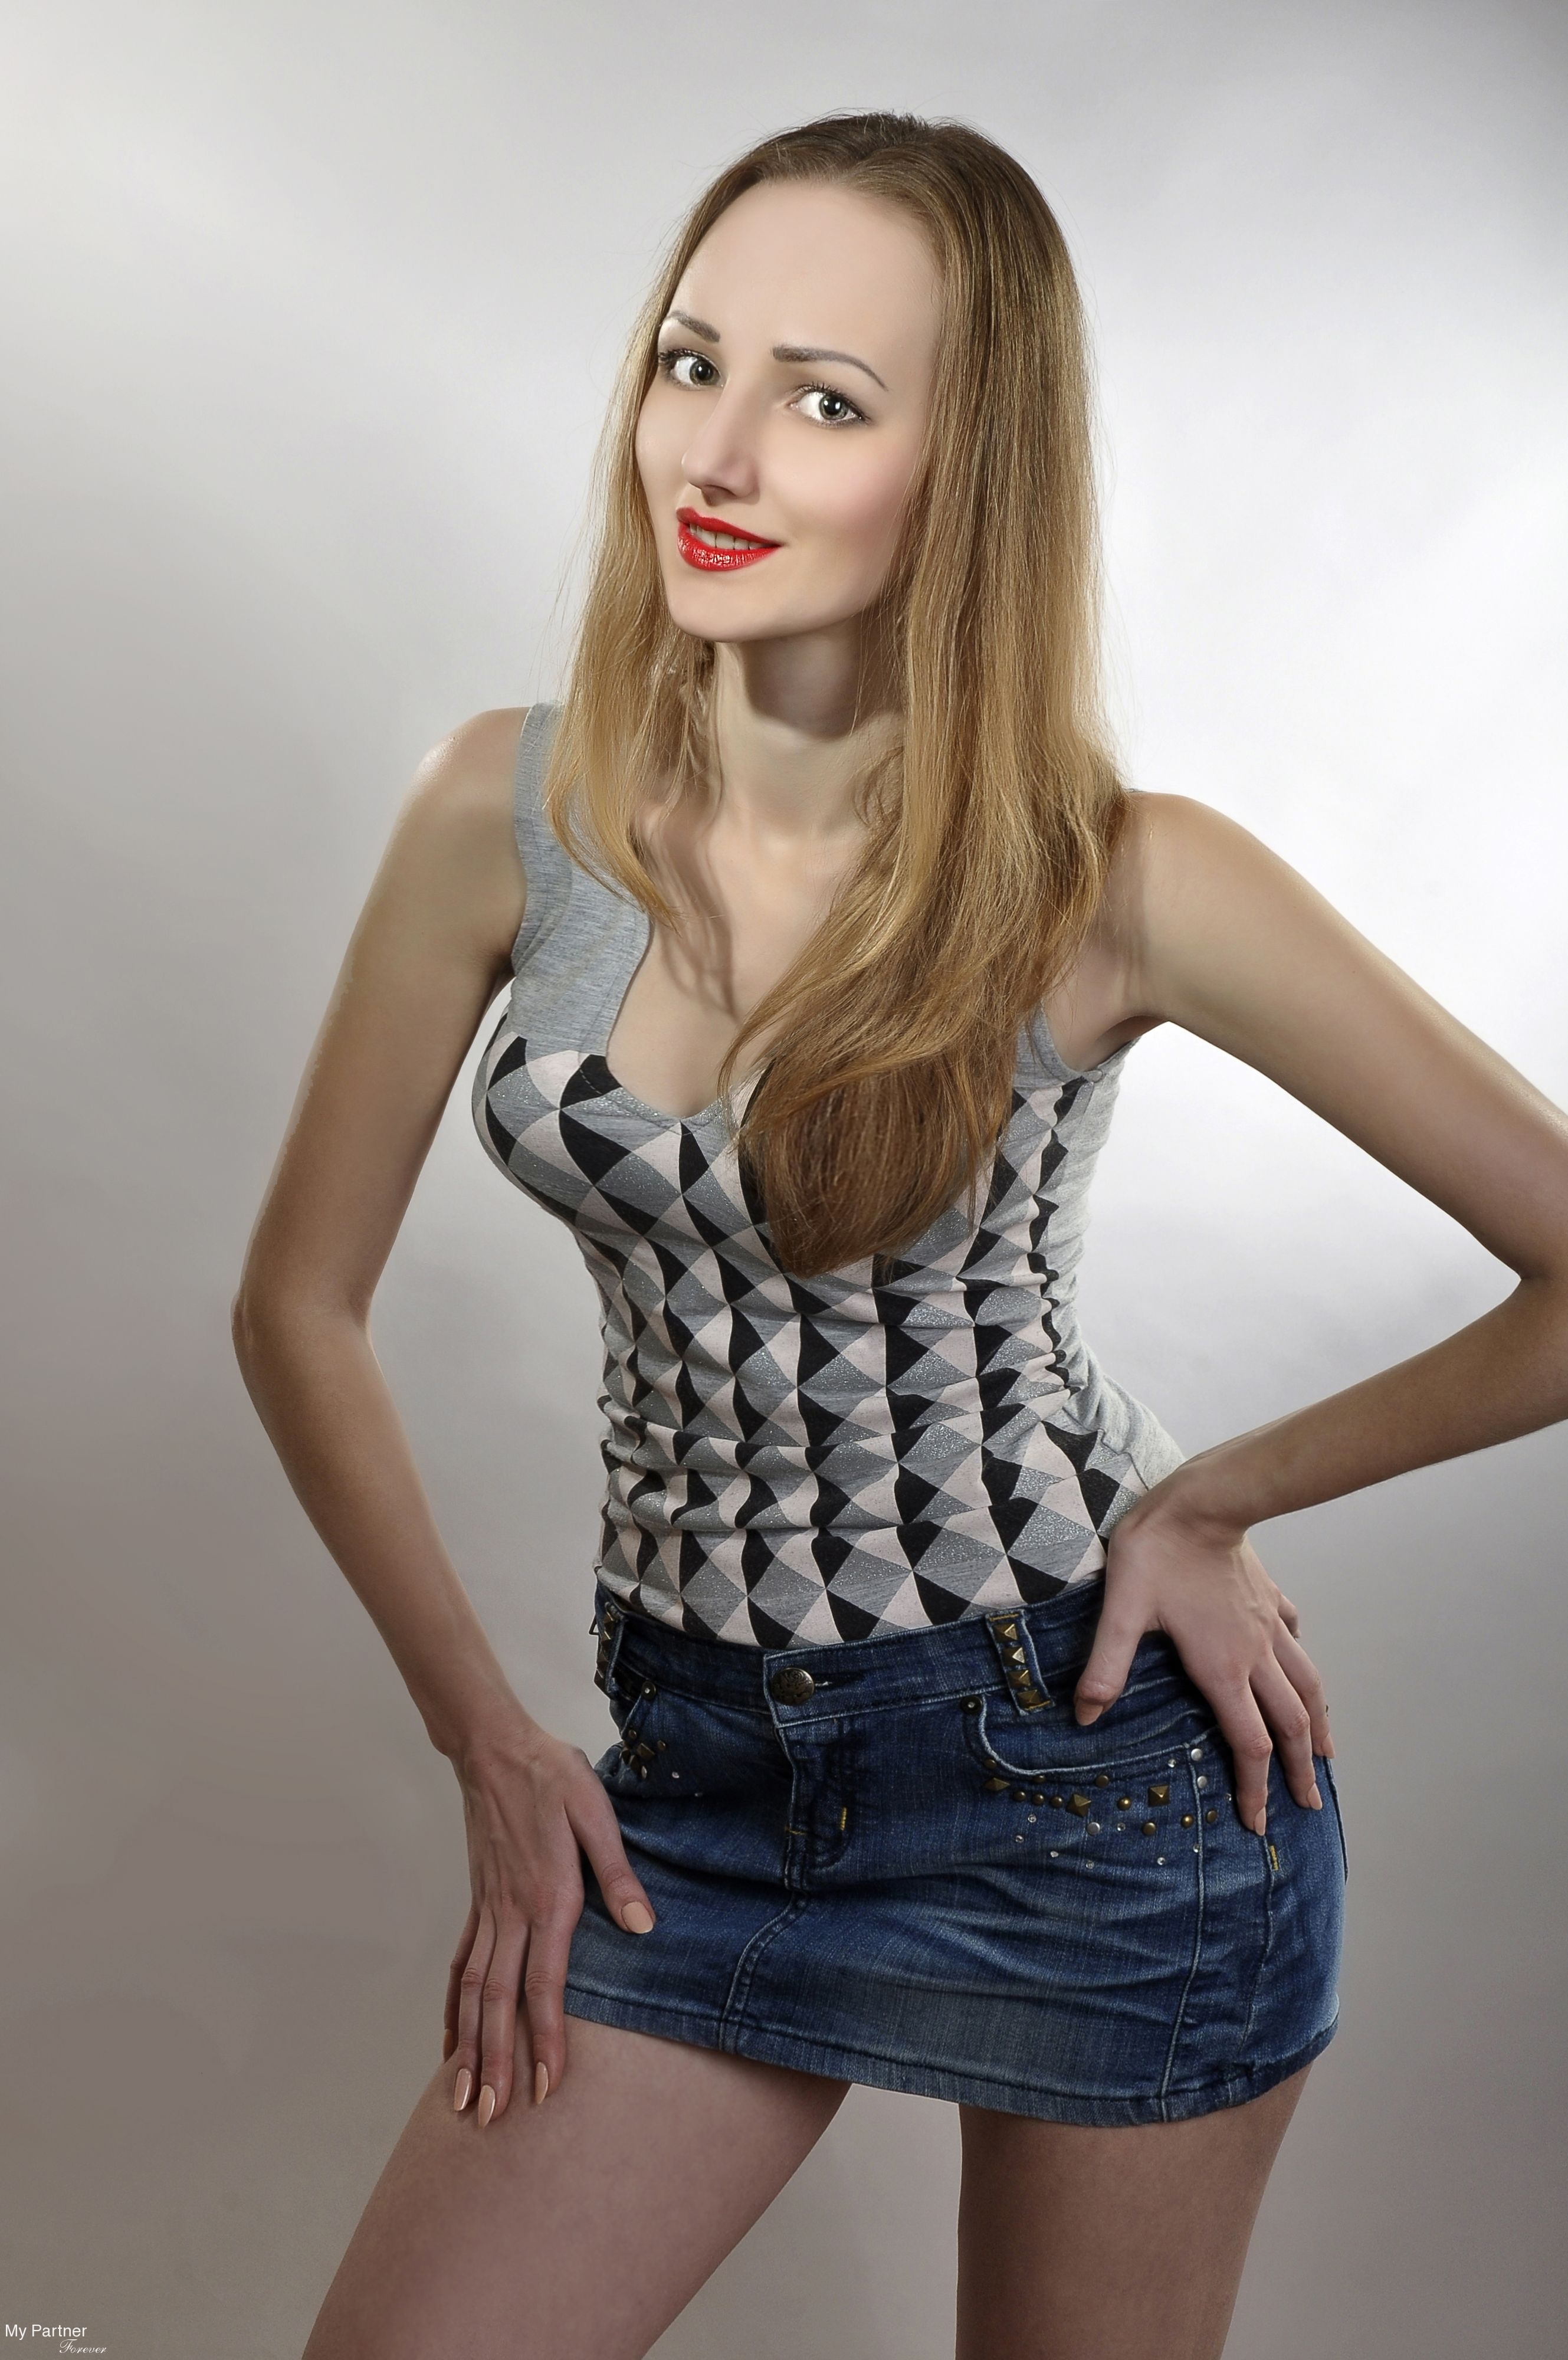 Dating Site to Meet Stunning Ukrainian Woman Oksana from Kiev, Ukraine